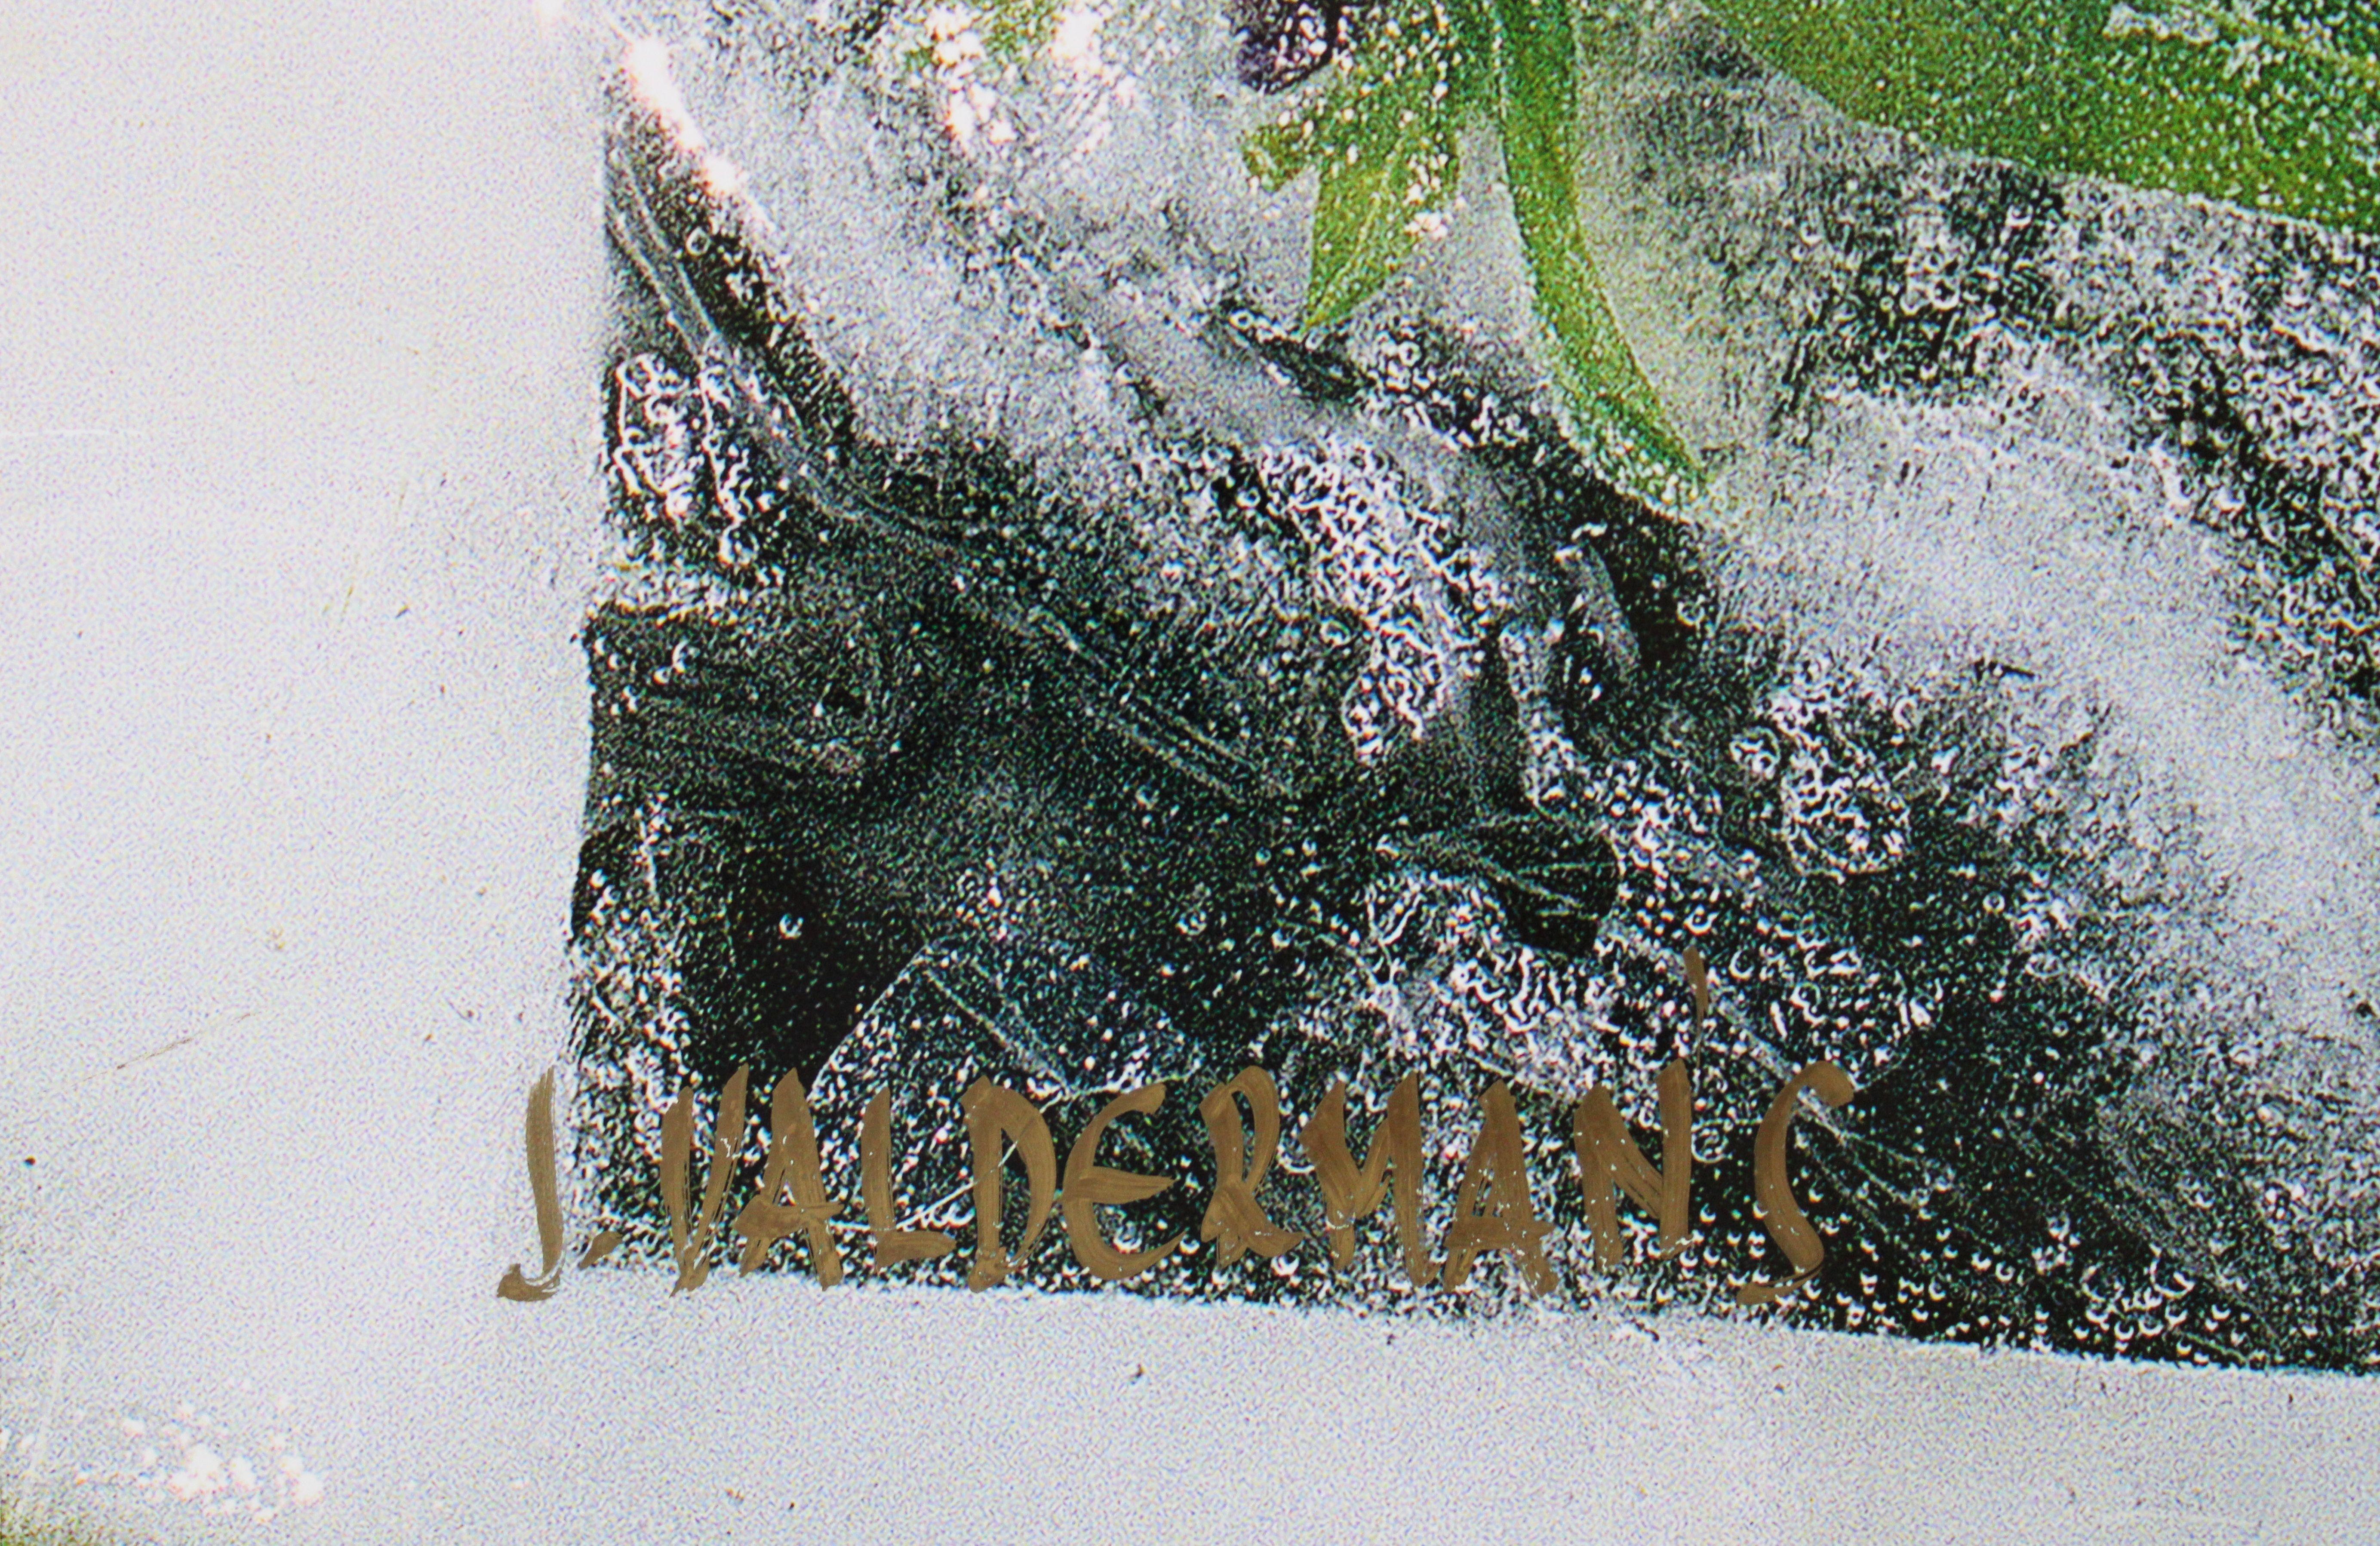 Willowherb. 2004, photography, ice/sun/water, 81x51 cm